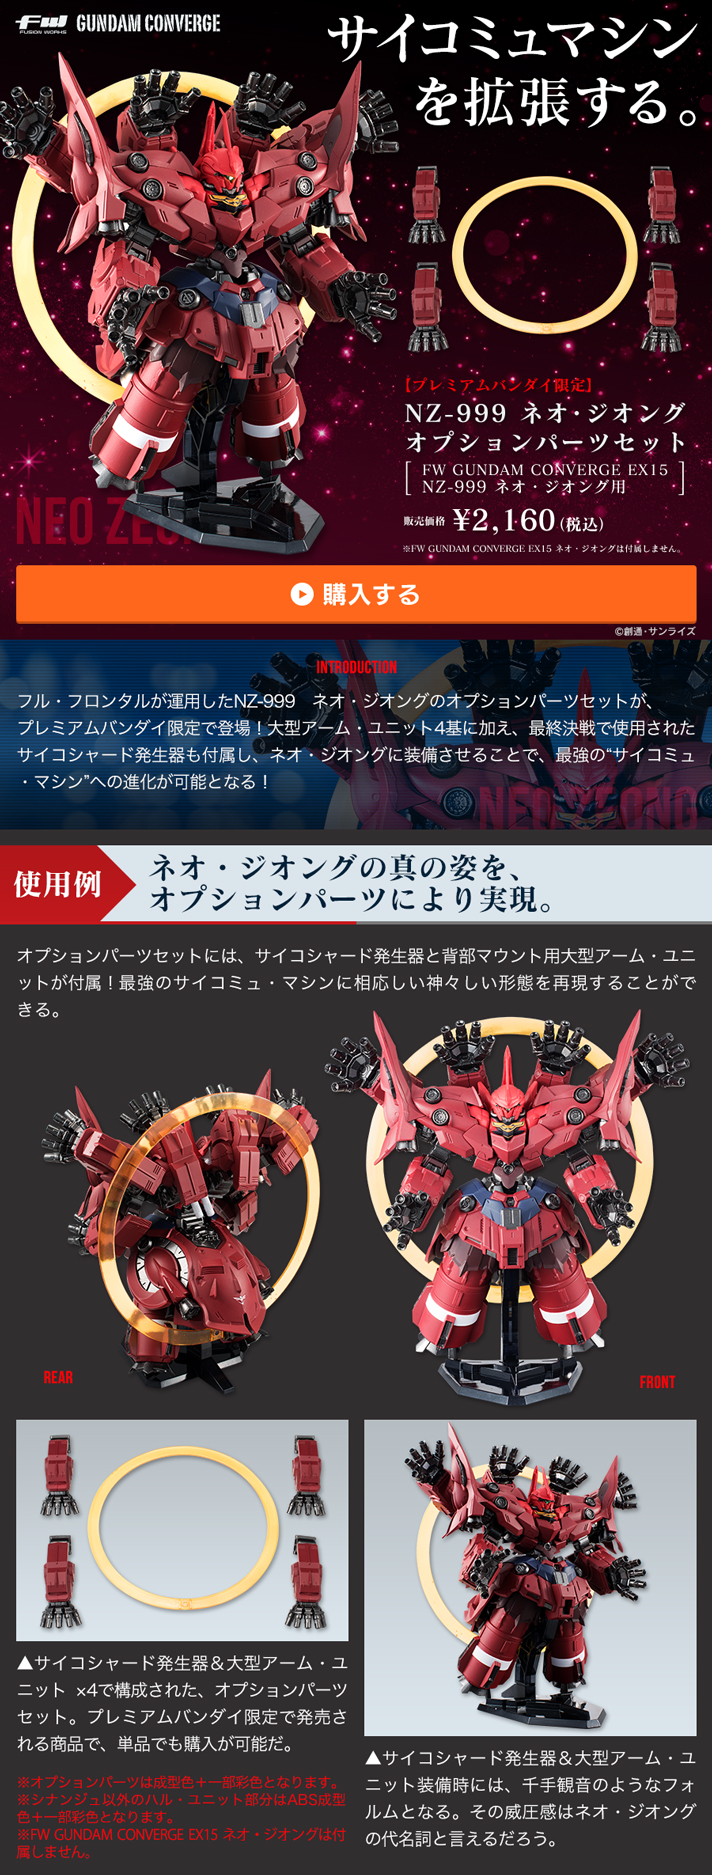 Fw Gundam Converge ネオ ジオングオプションパーツセット プレミアムバンダイ限定 機動戦士ガンダムuc ユニコーン 趣味 コレクション バンダイナムコグループ公式通販サイト